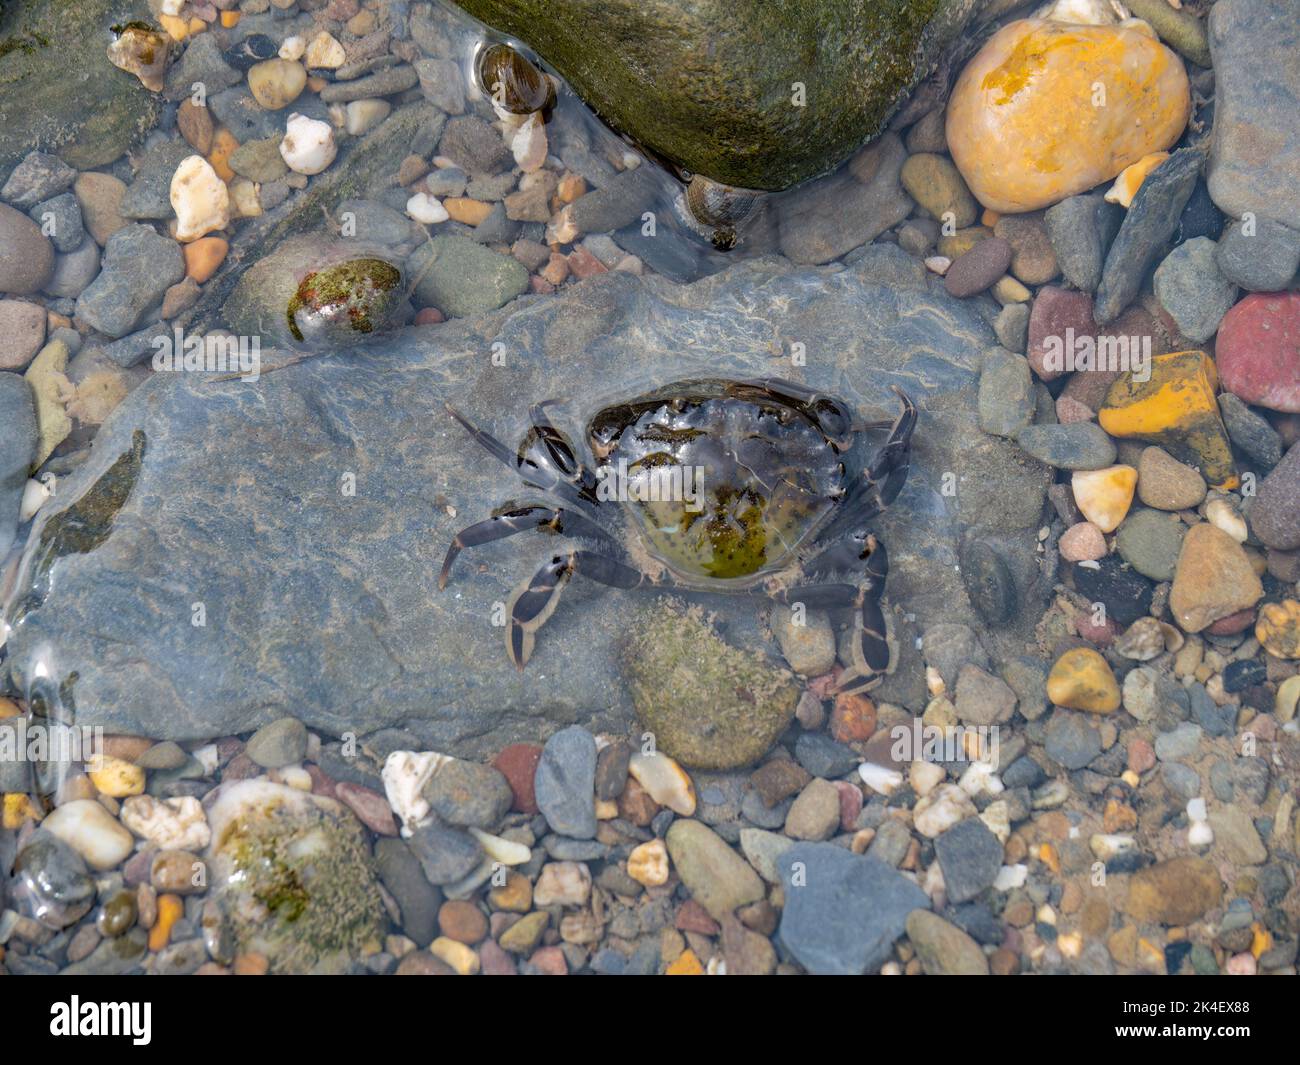 Green shore crab in rockpool, Devon, UK. Stock Photo